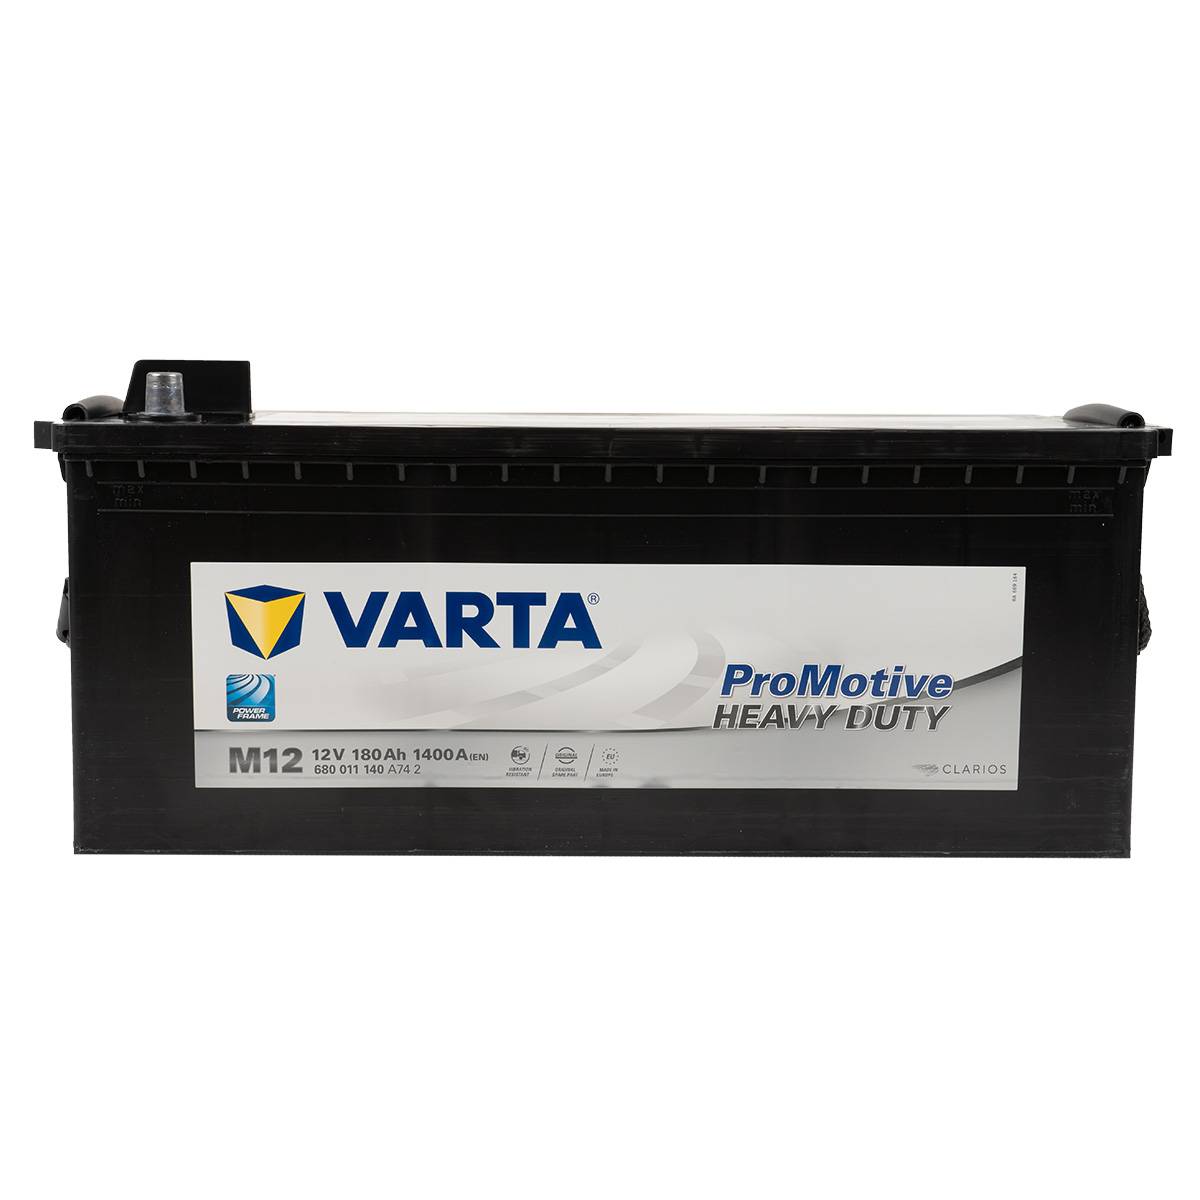 VARTA M12 ProMotive Heavy Duty 12V 180Ah 1400A LKW Batterie 680 011 140